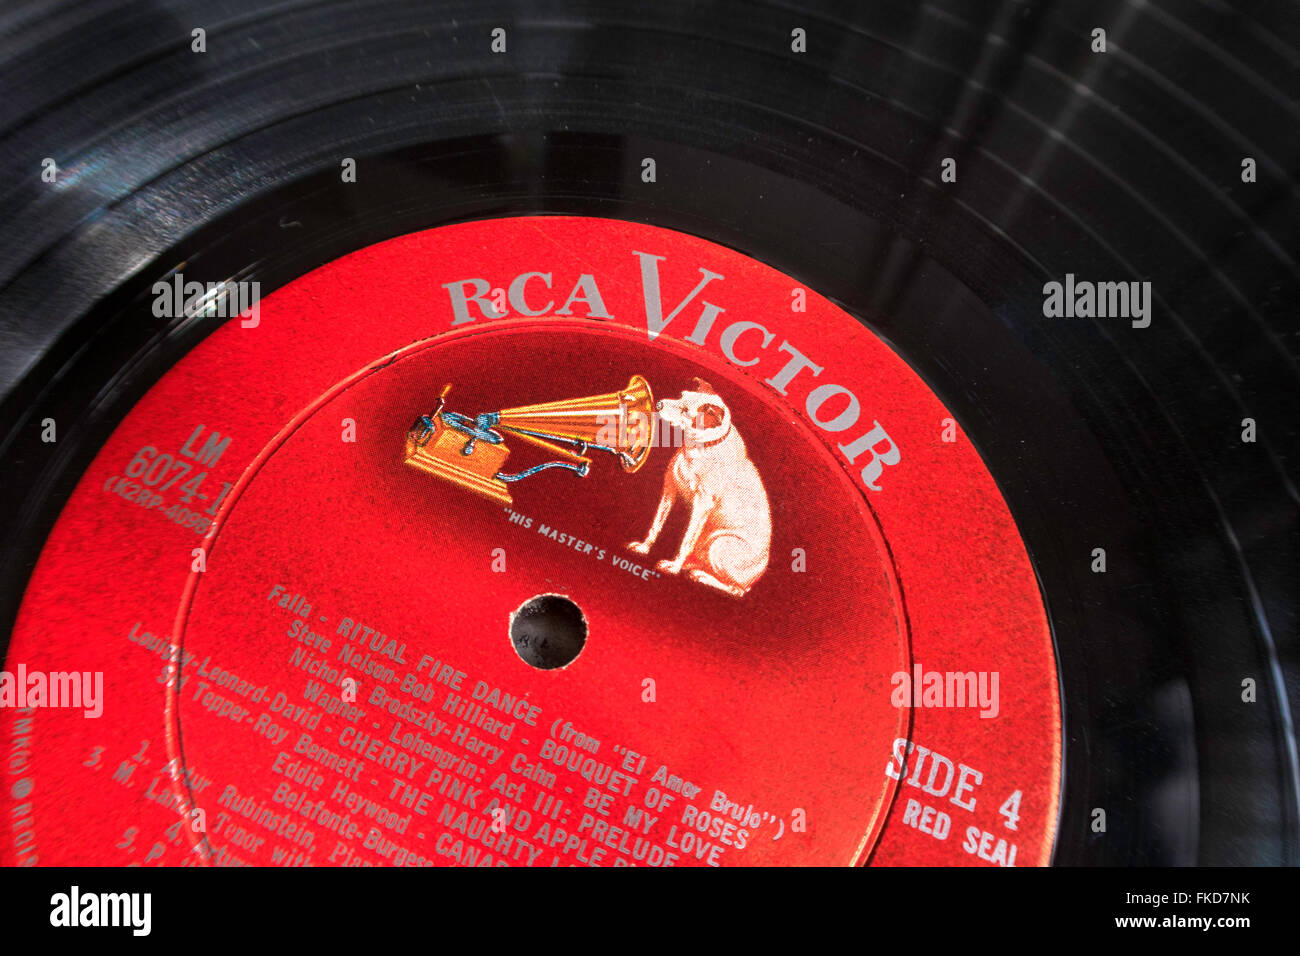 Vintage RCA Victor Vinyl Record Label Stock Photo